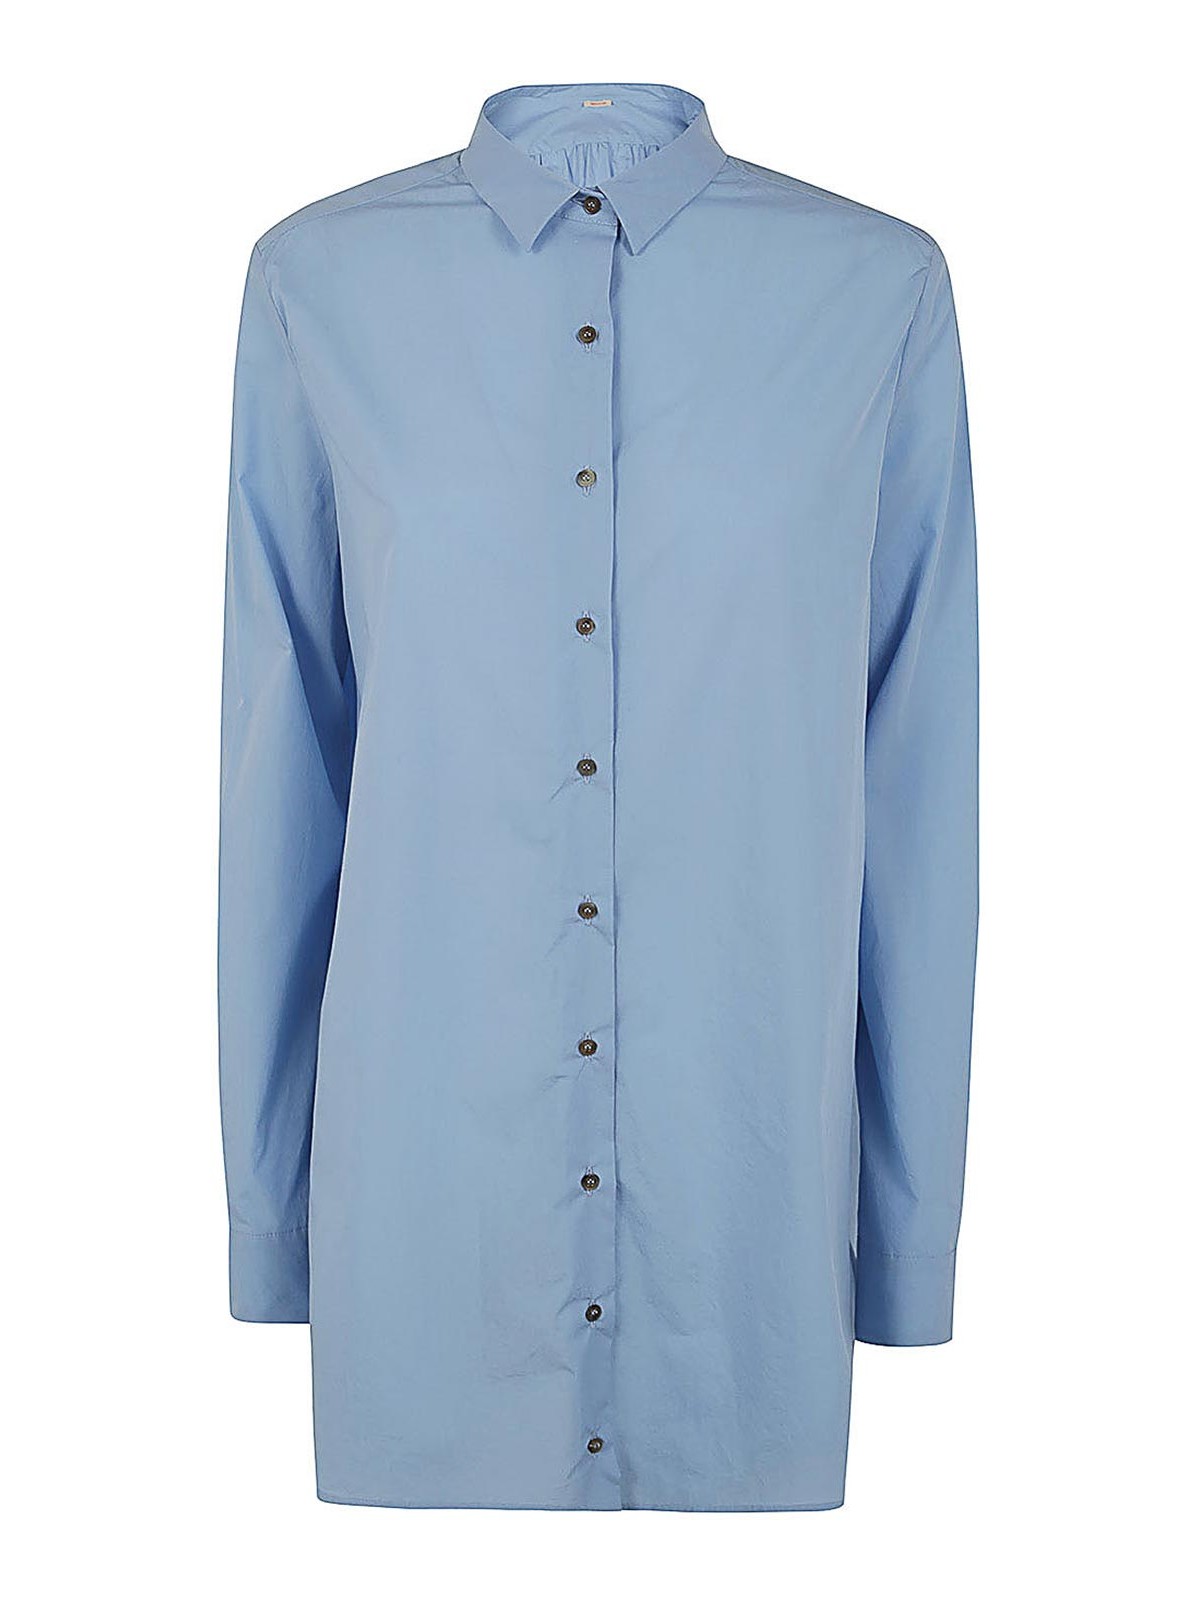 Apuntob Oversize Shirt In Blue